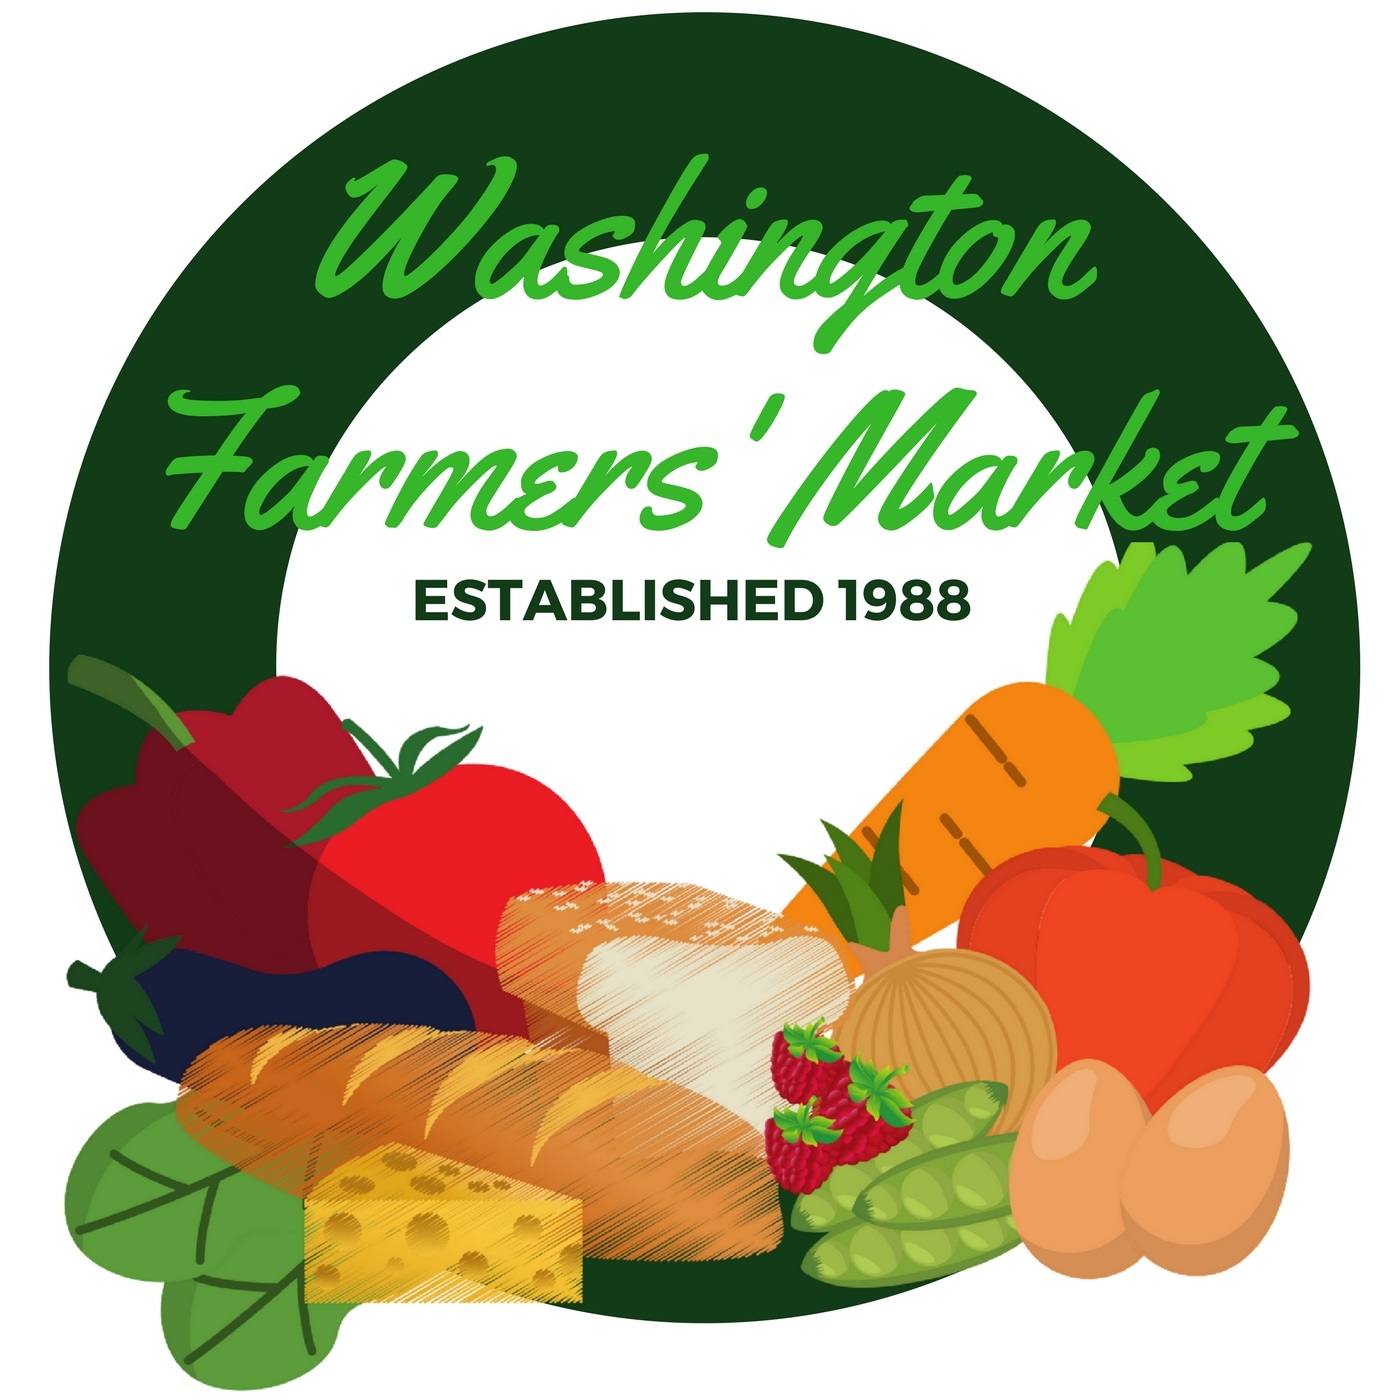 Washington Farmers' Market